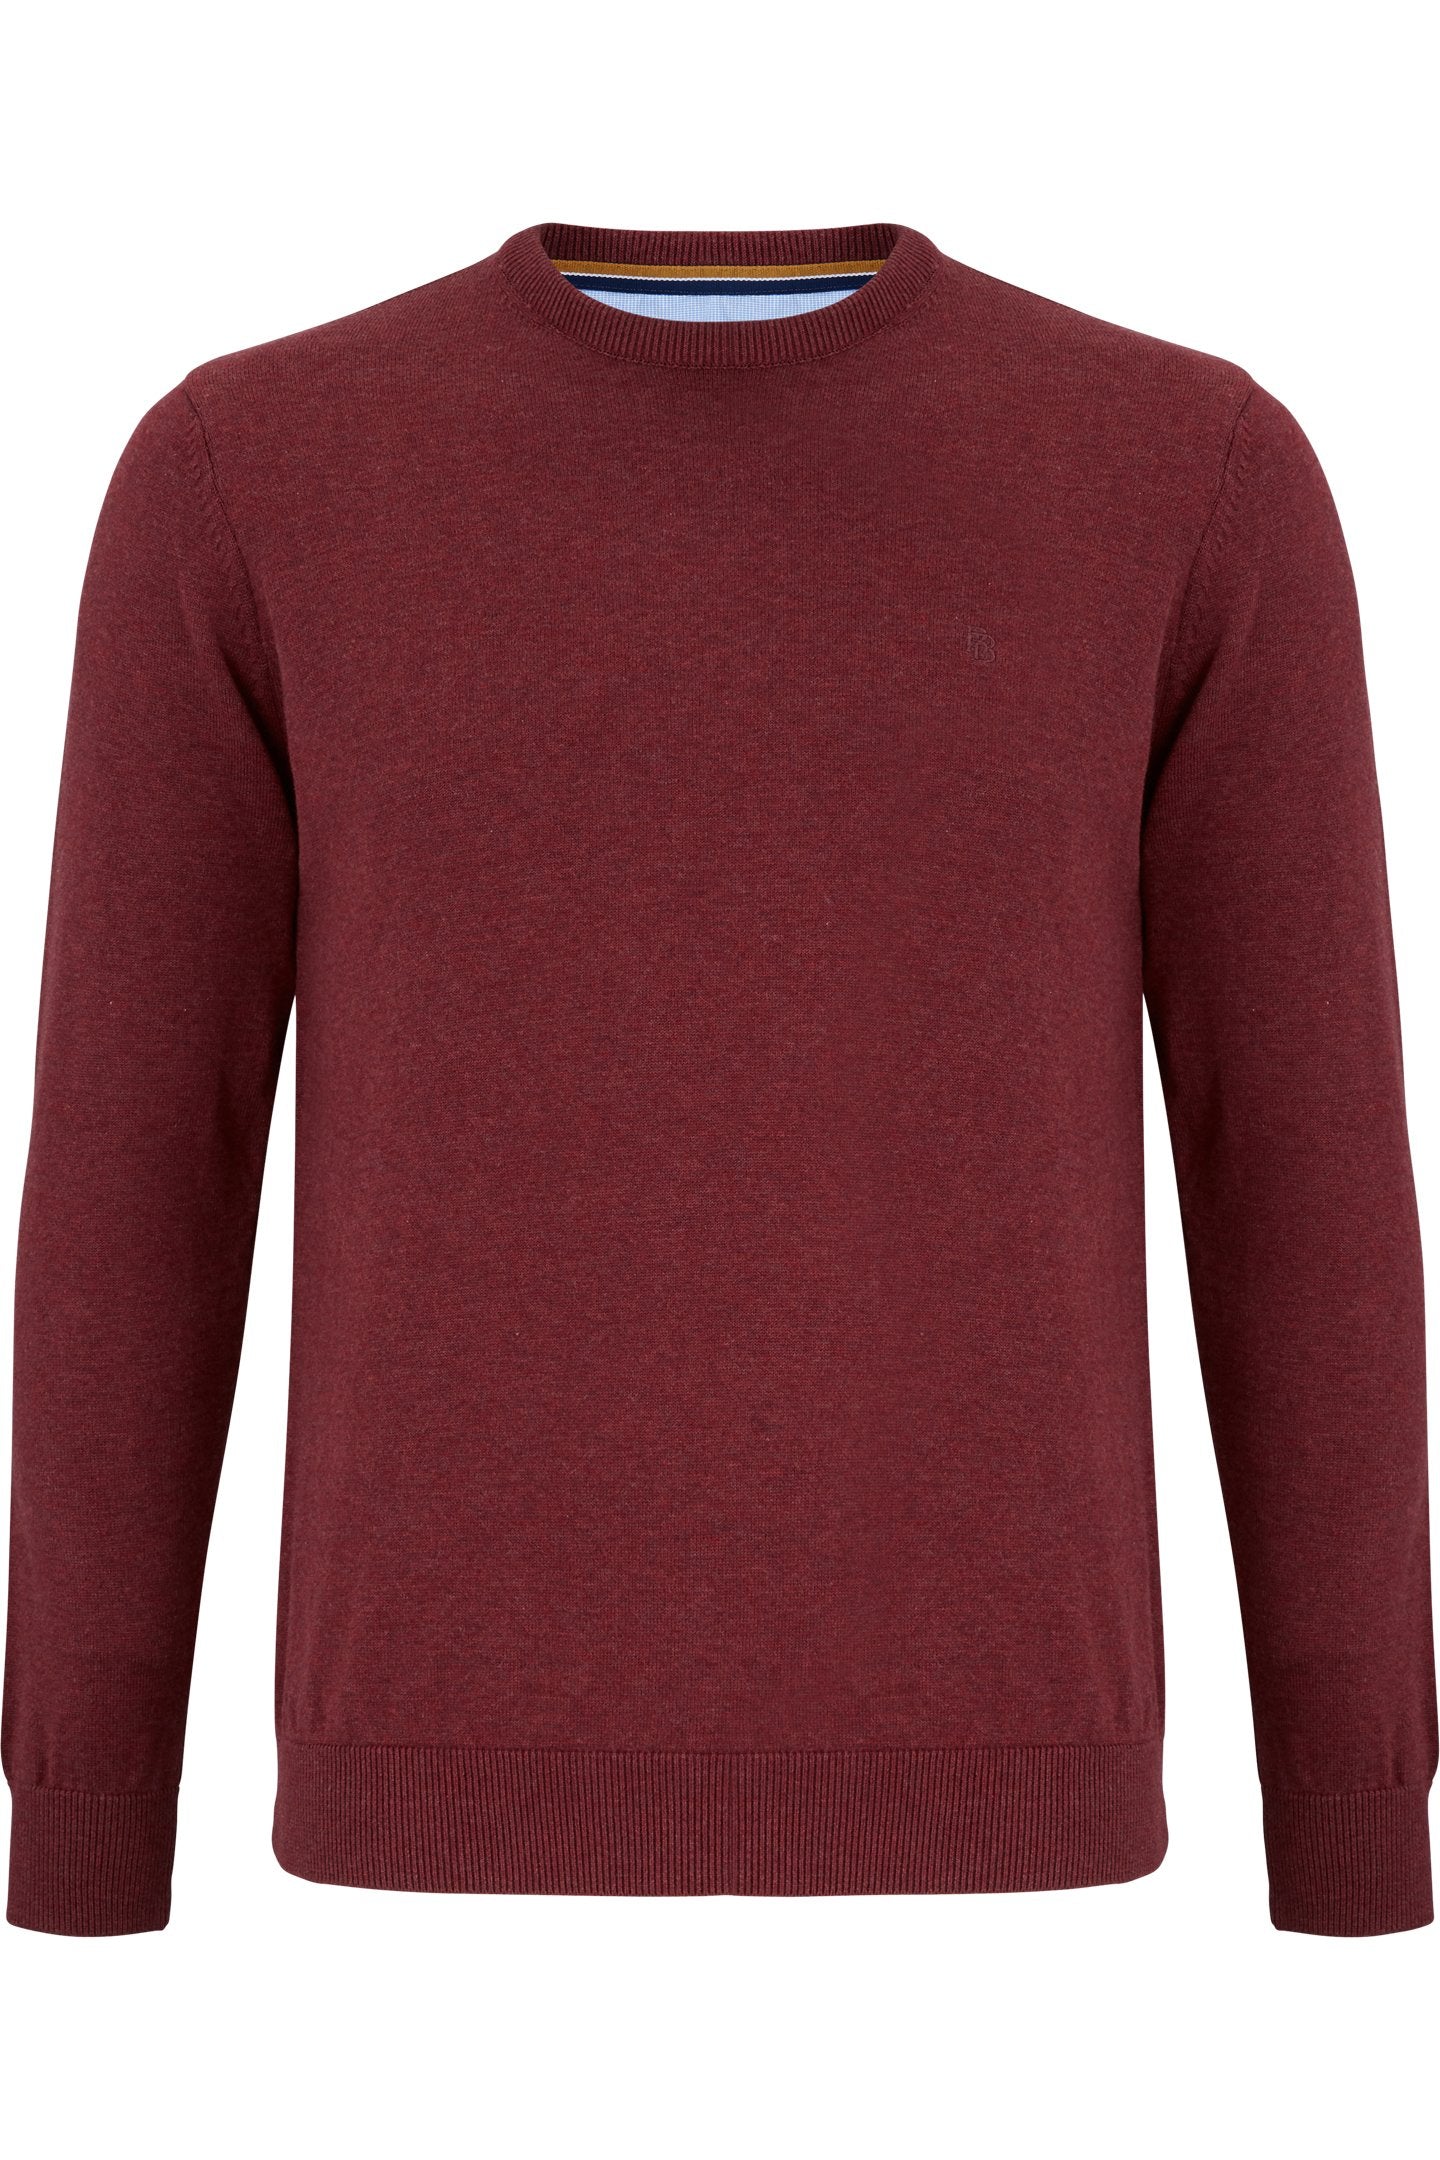 Jason Benetti Fan Club shirt, hoodie, sweater, long sleeve and